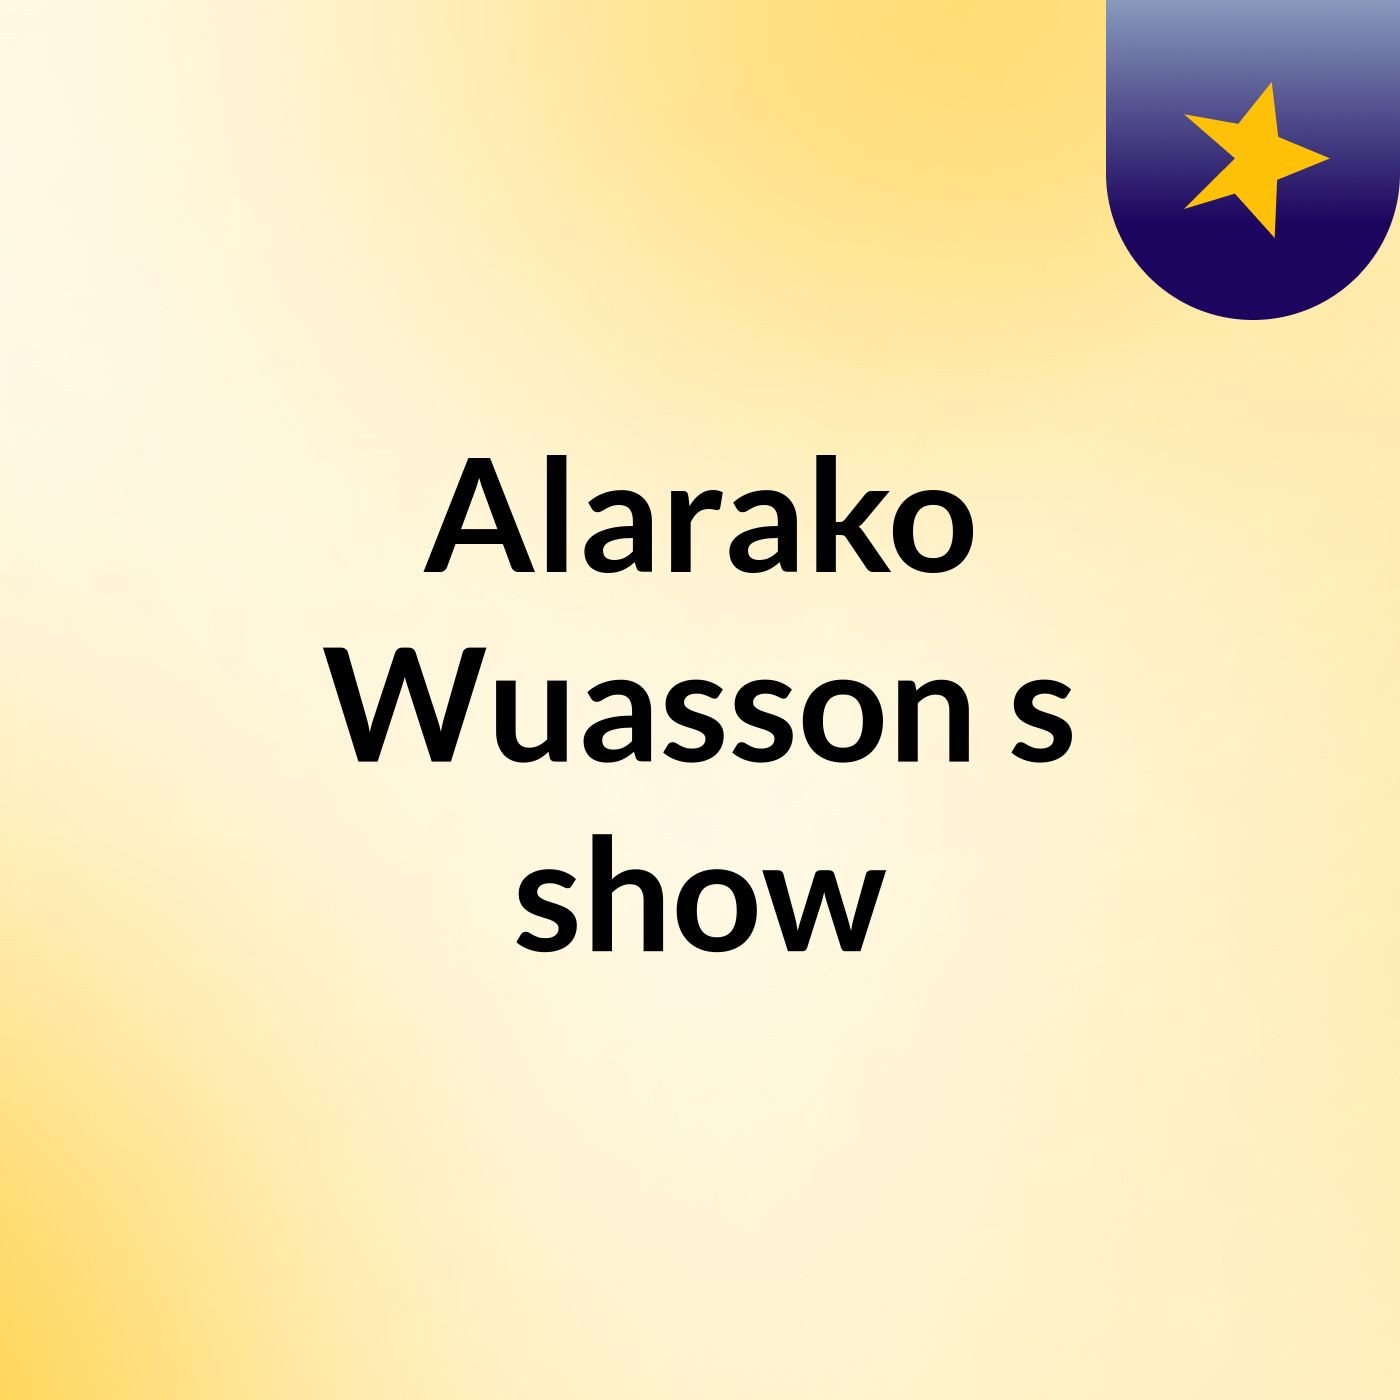 Alarako Wuasson's show